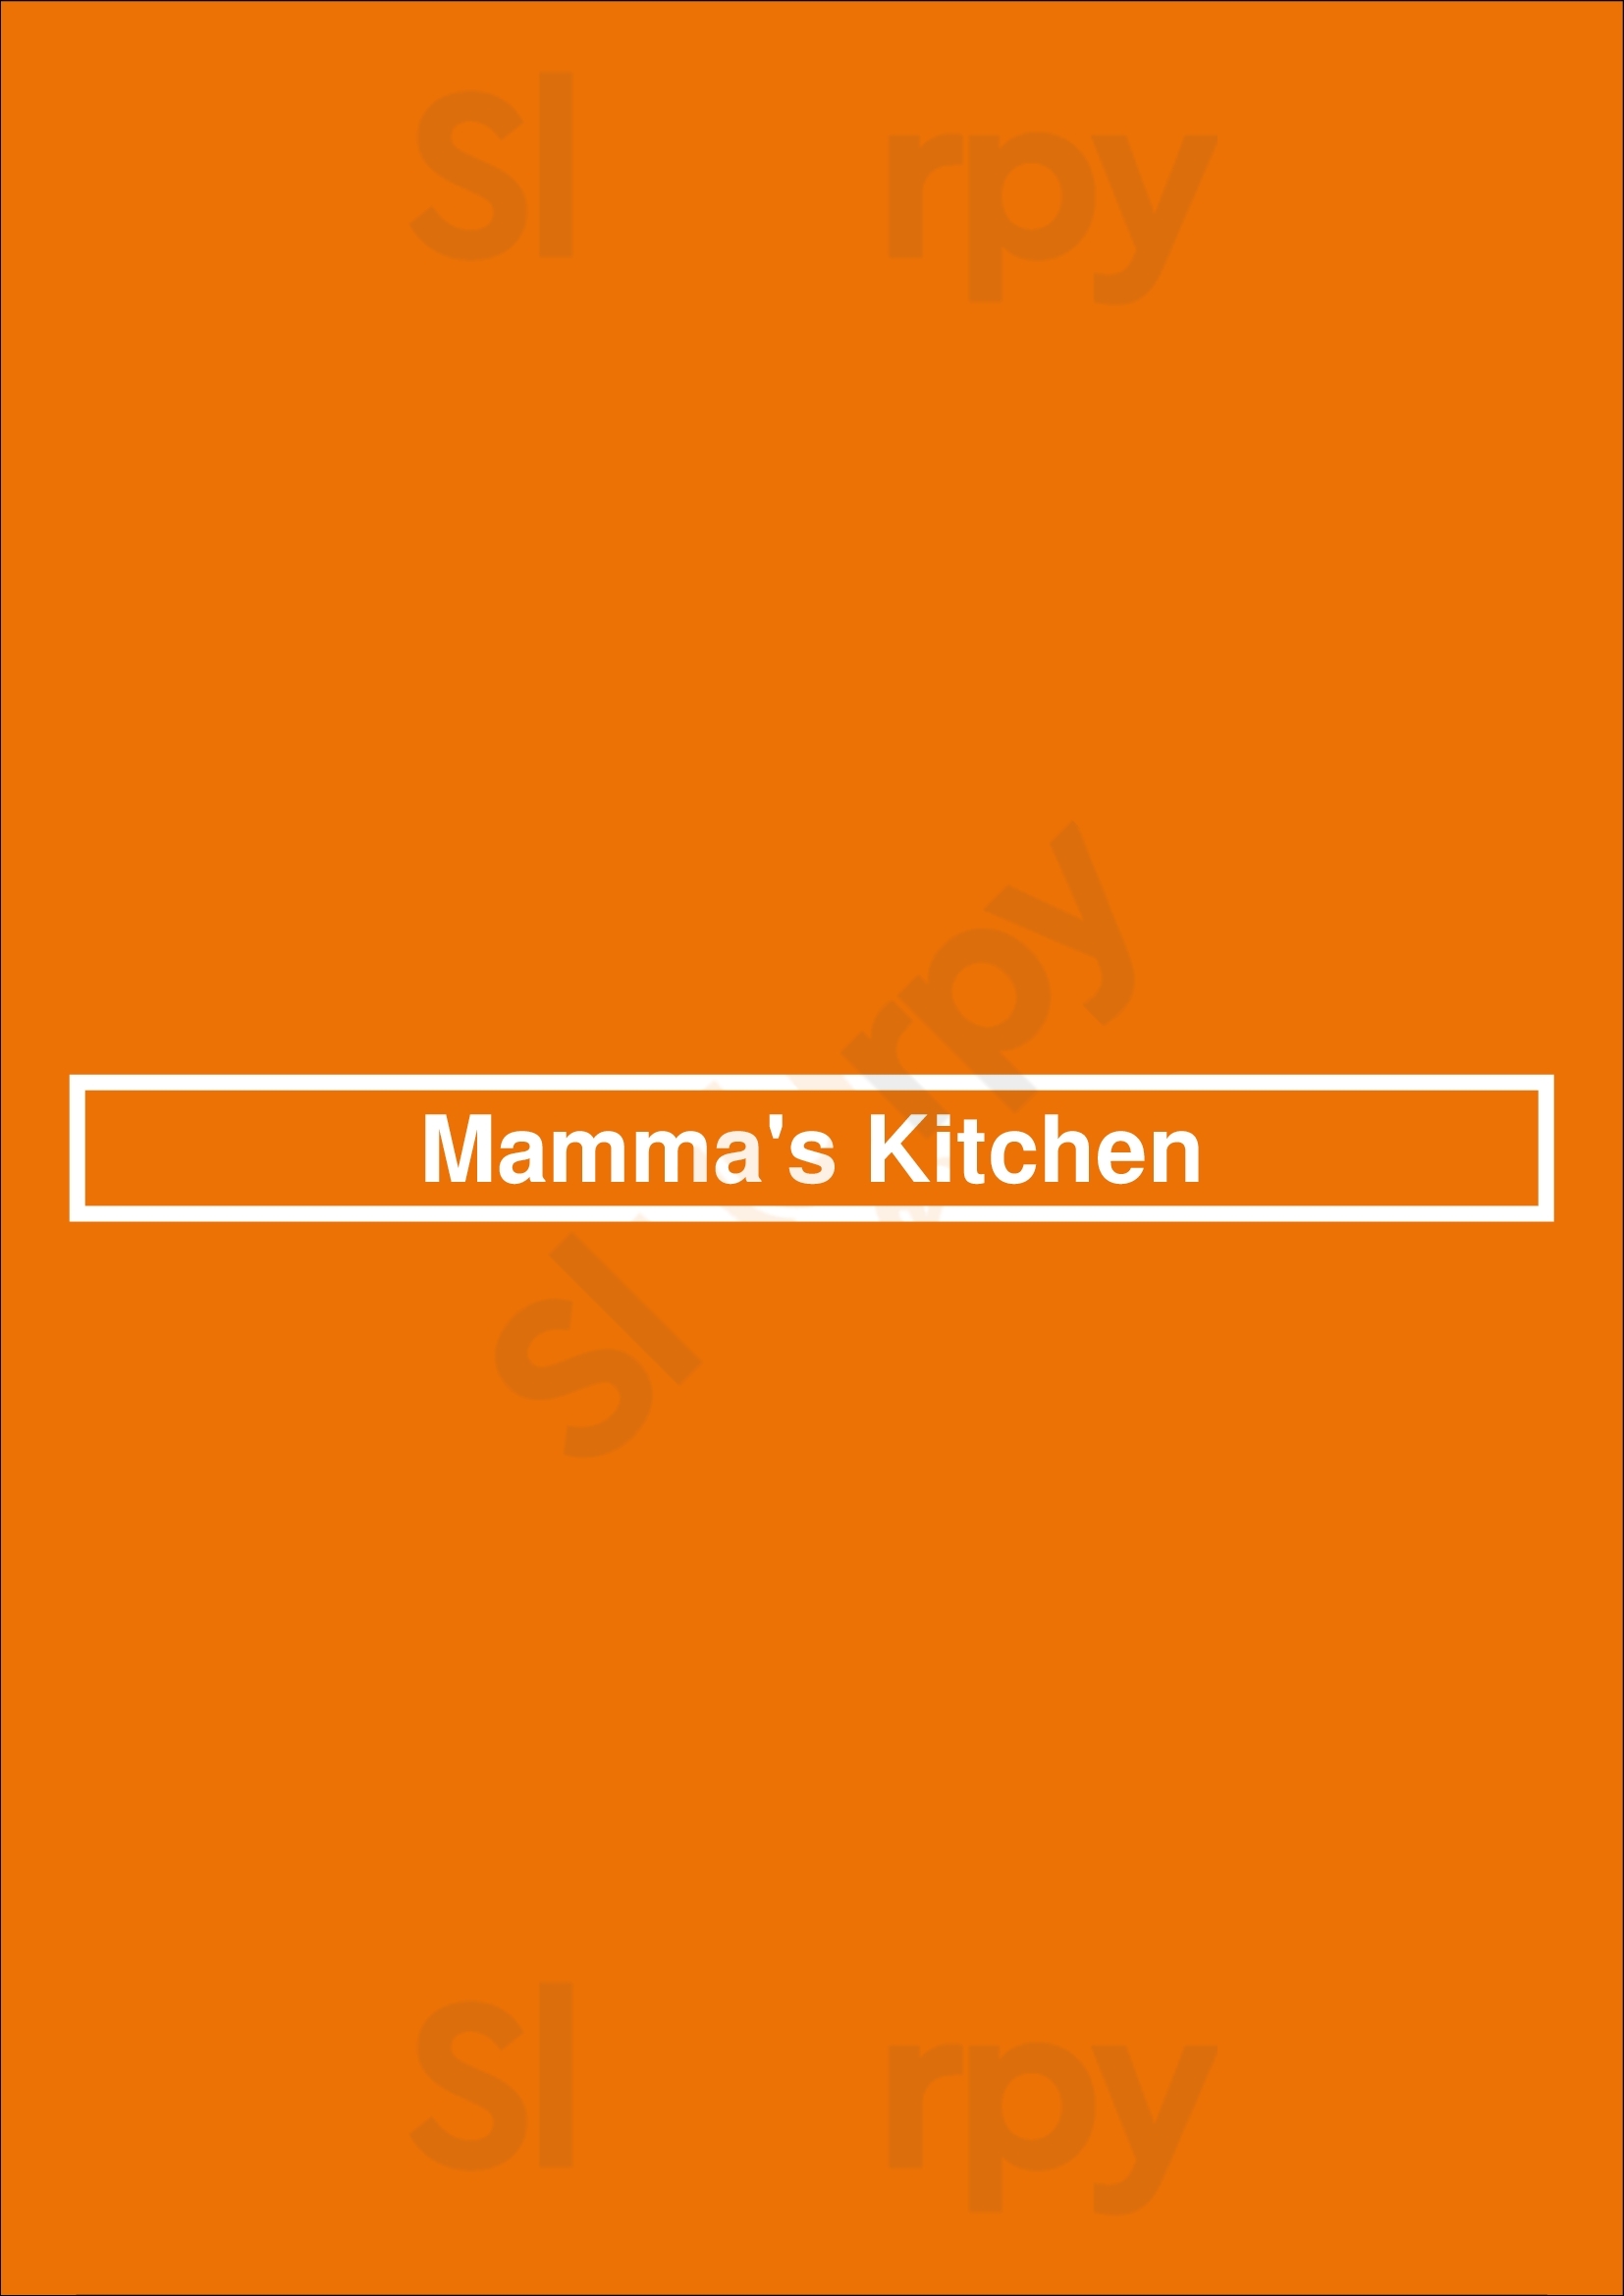 Mamma's Kitchen Alexandria Menu - 1